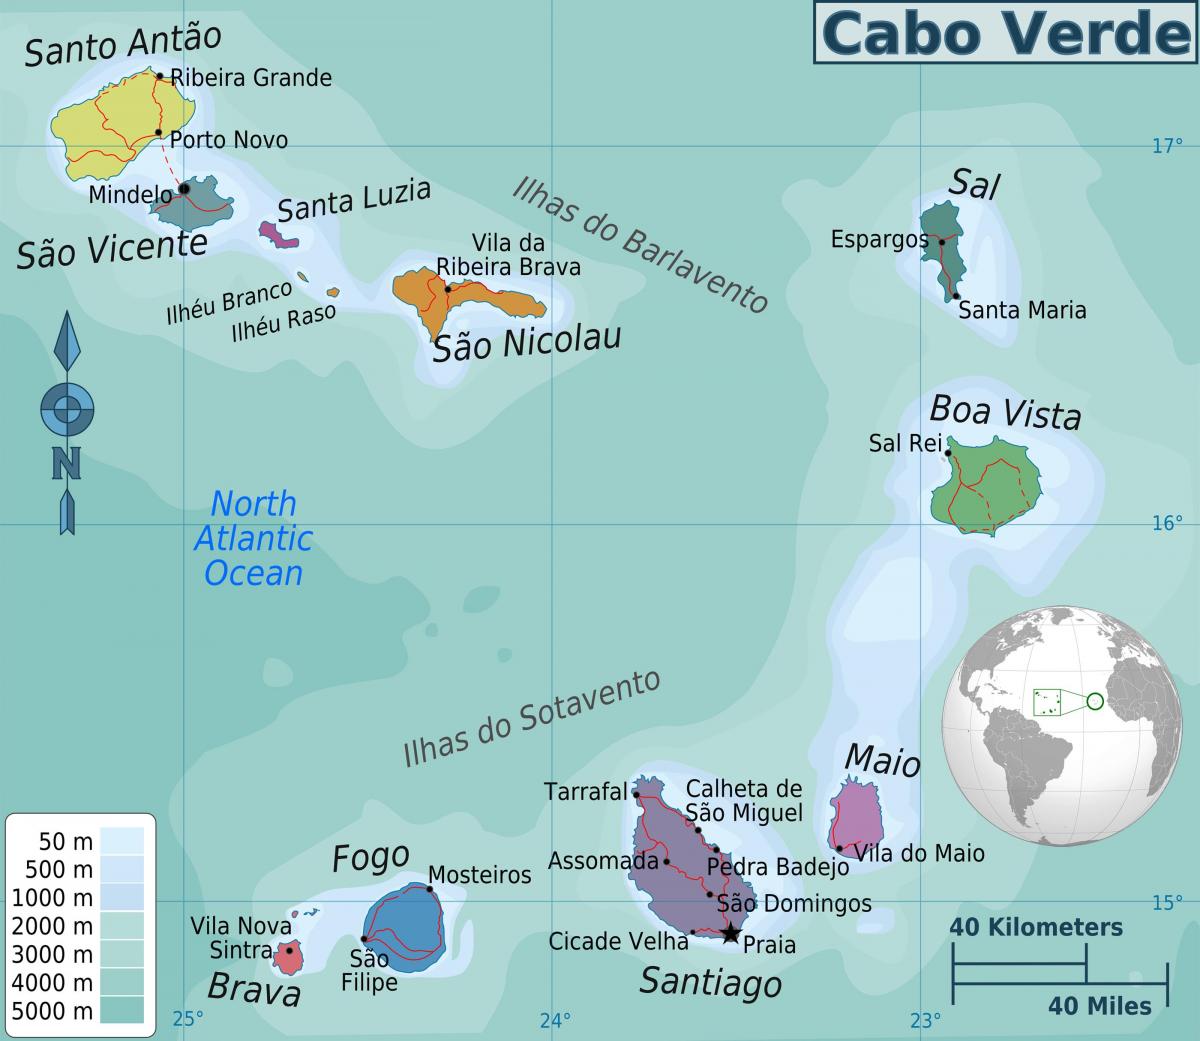 Cabo Verde no mapa